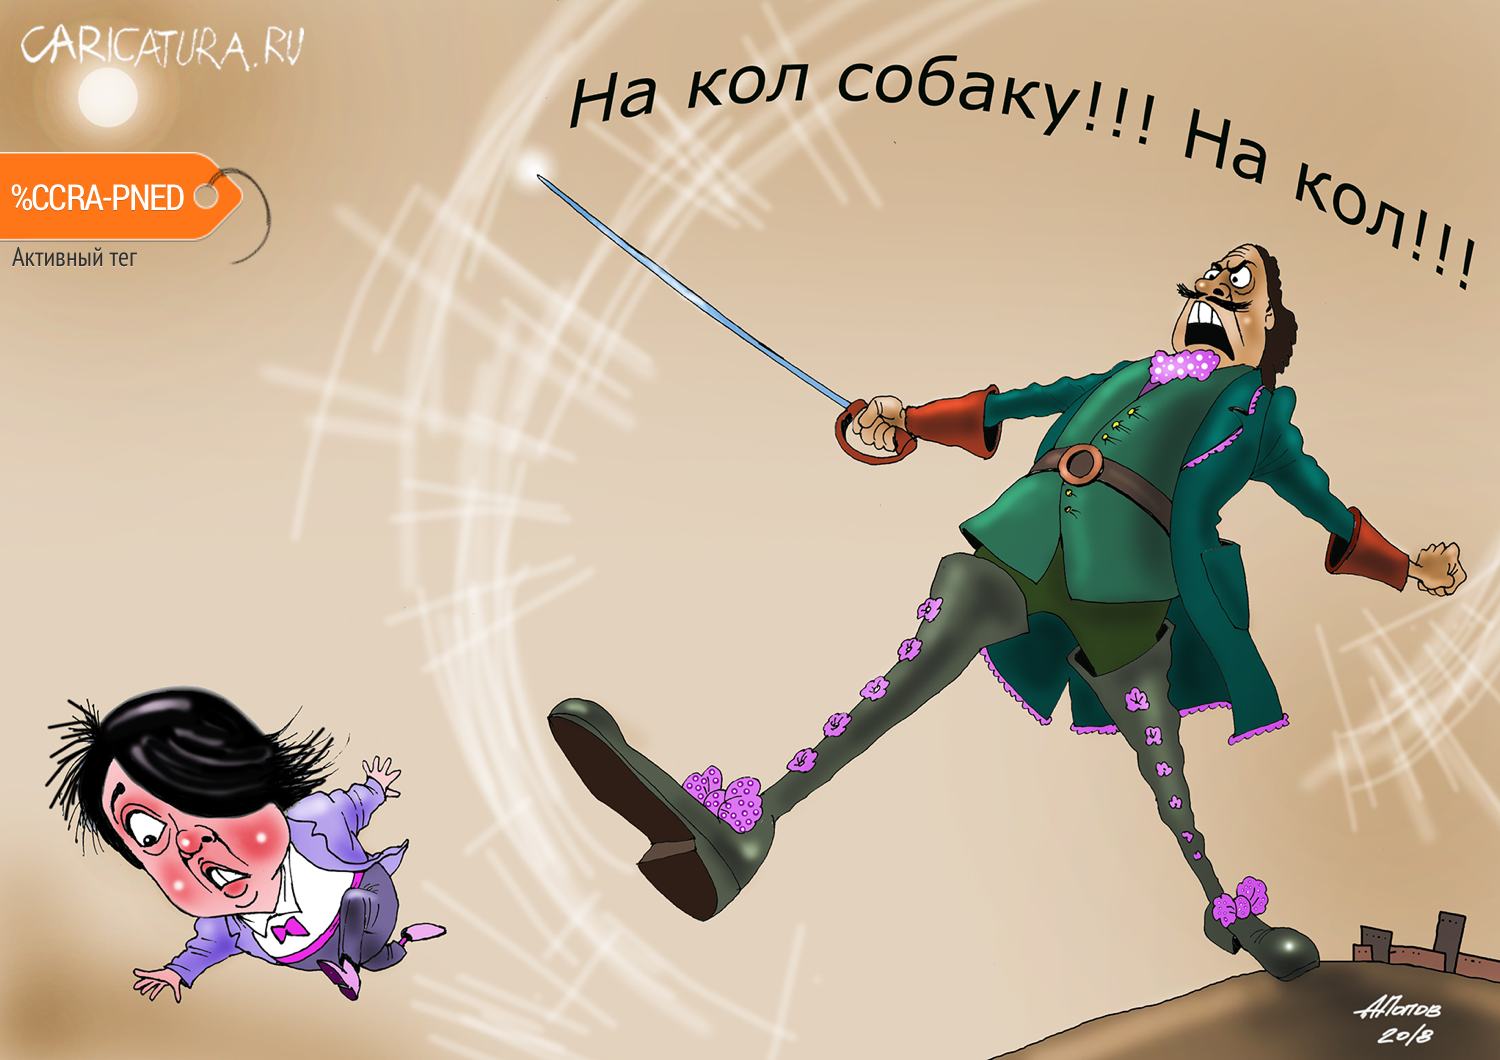 Карикатура "Не ко двору", Александр Попов